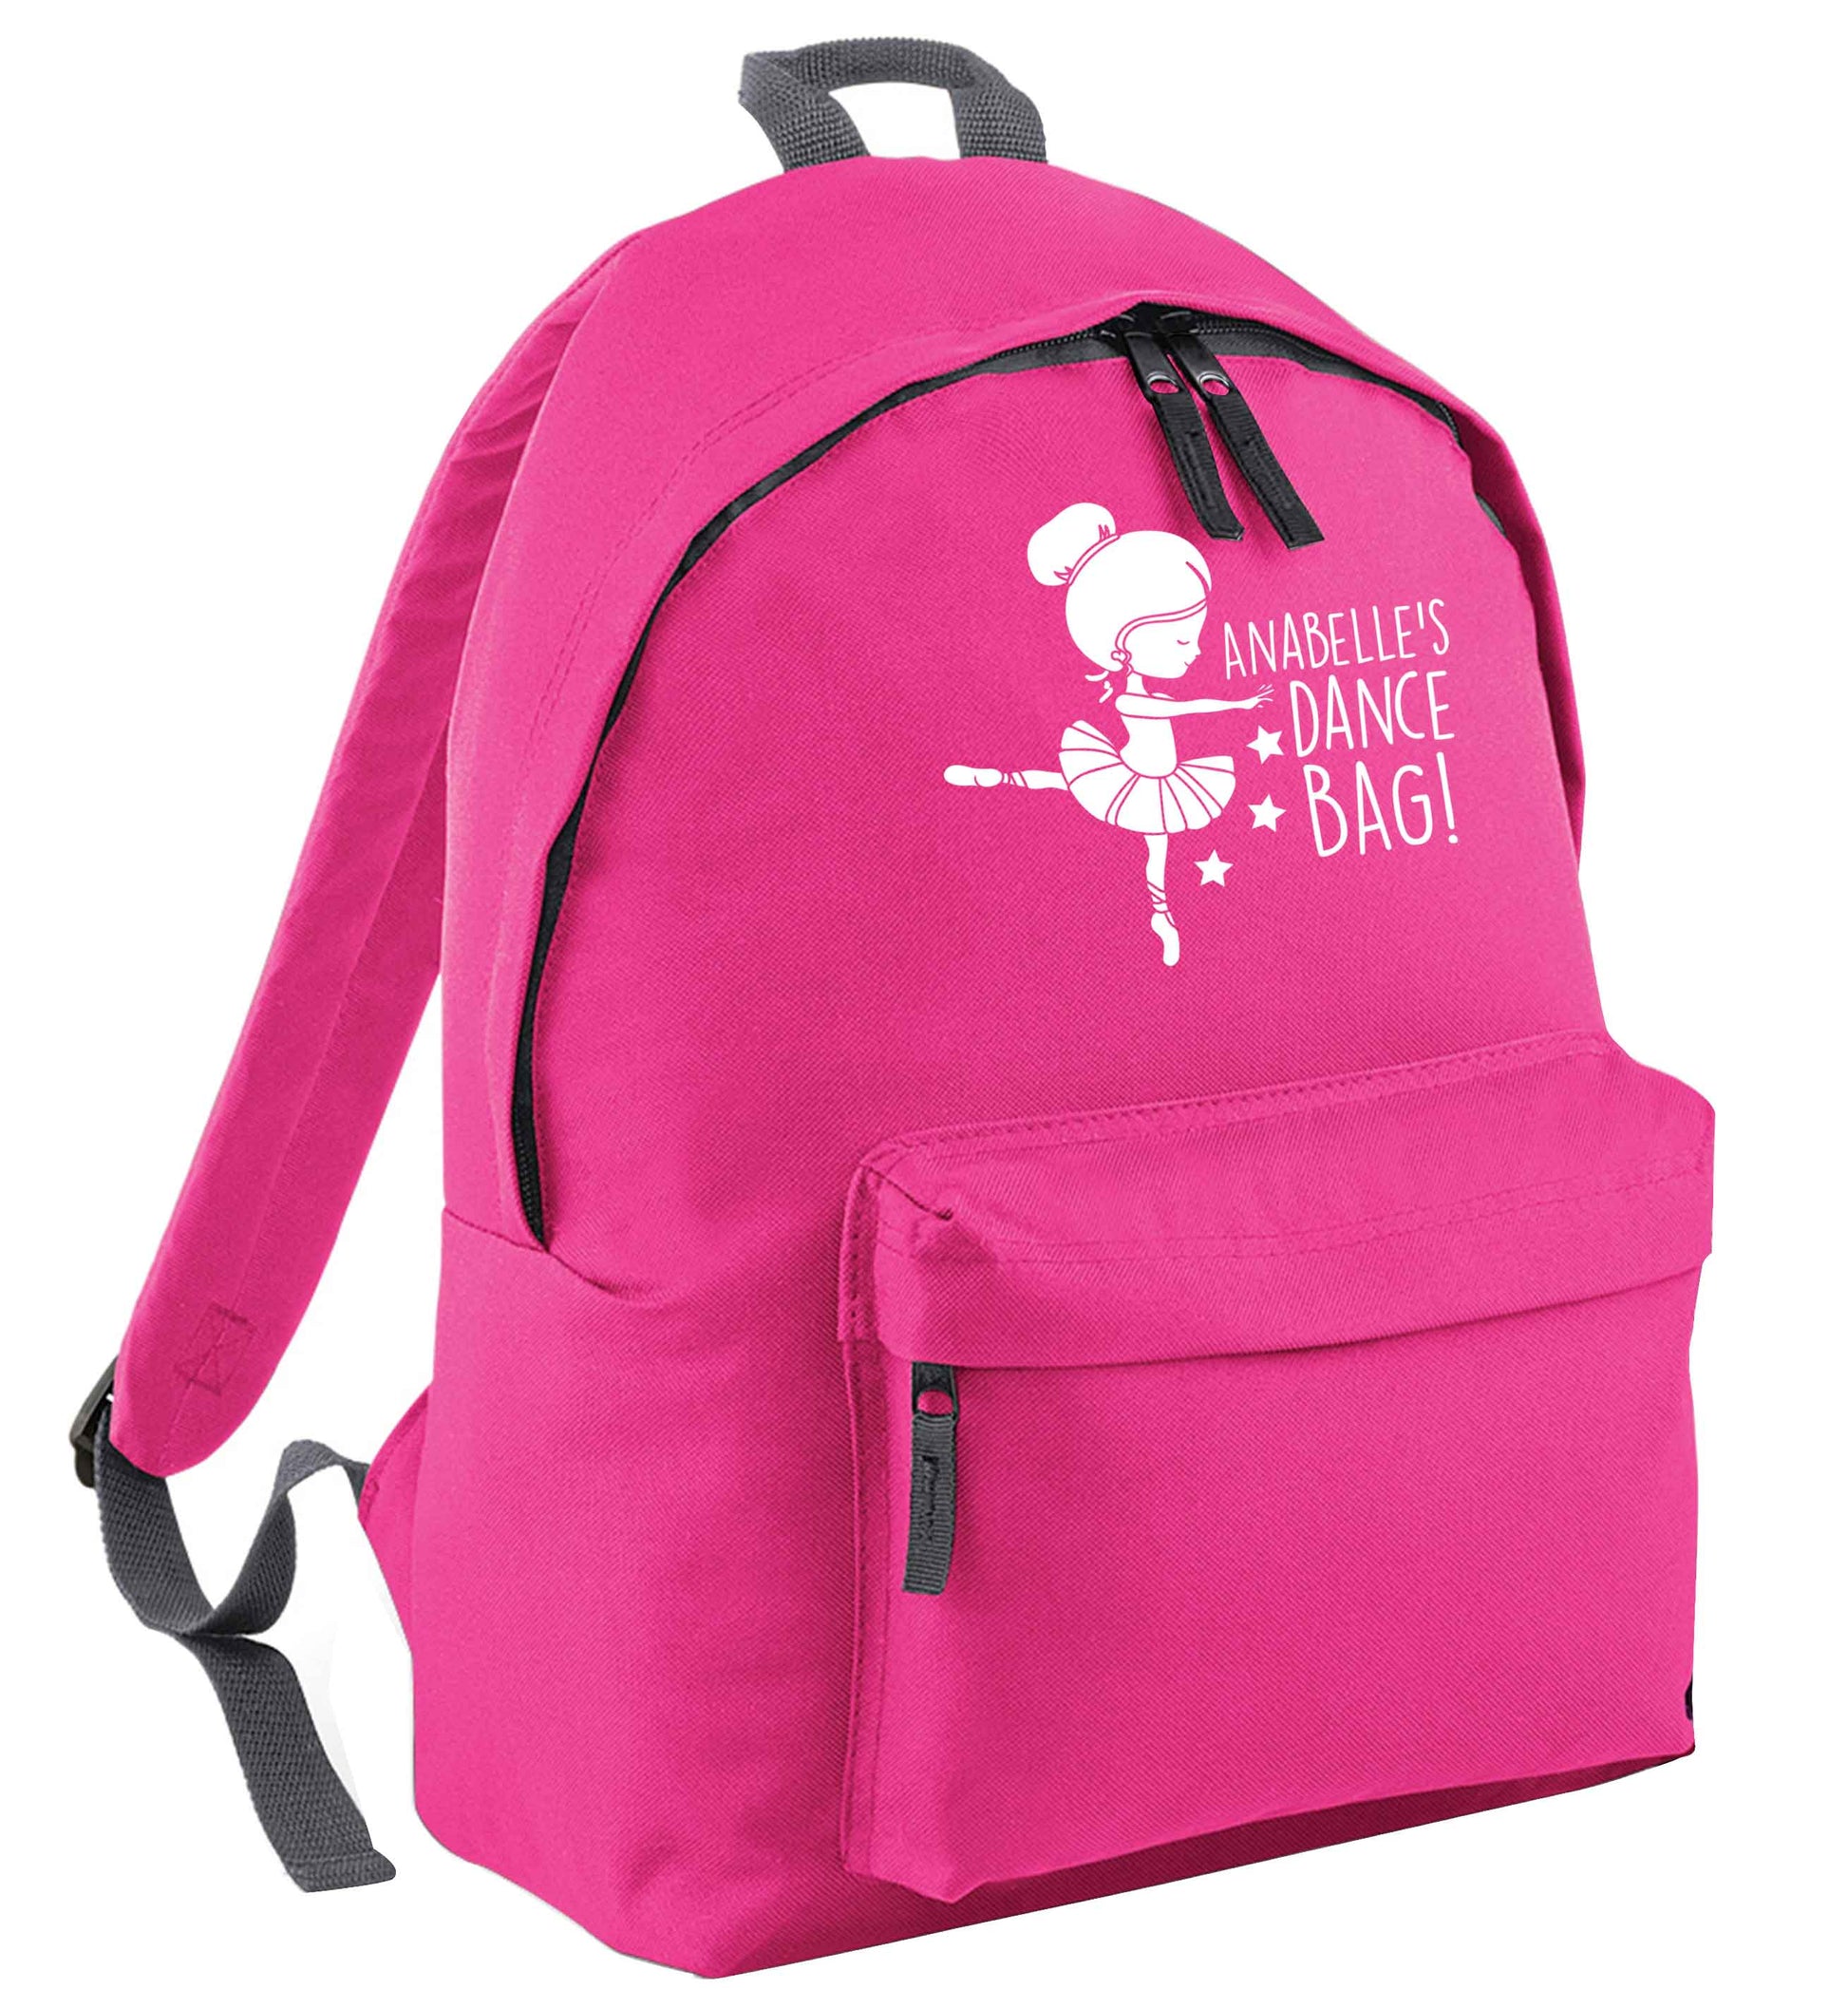 Personalised Ballet Dance Bag pink adults backpack